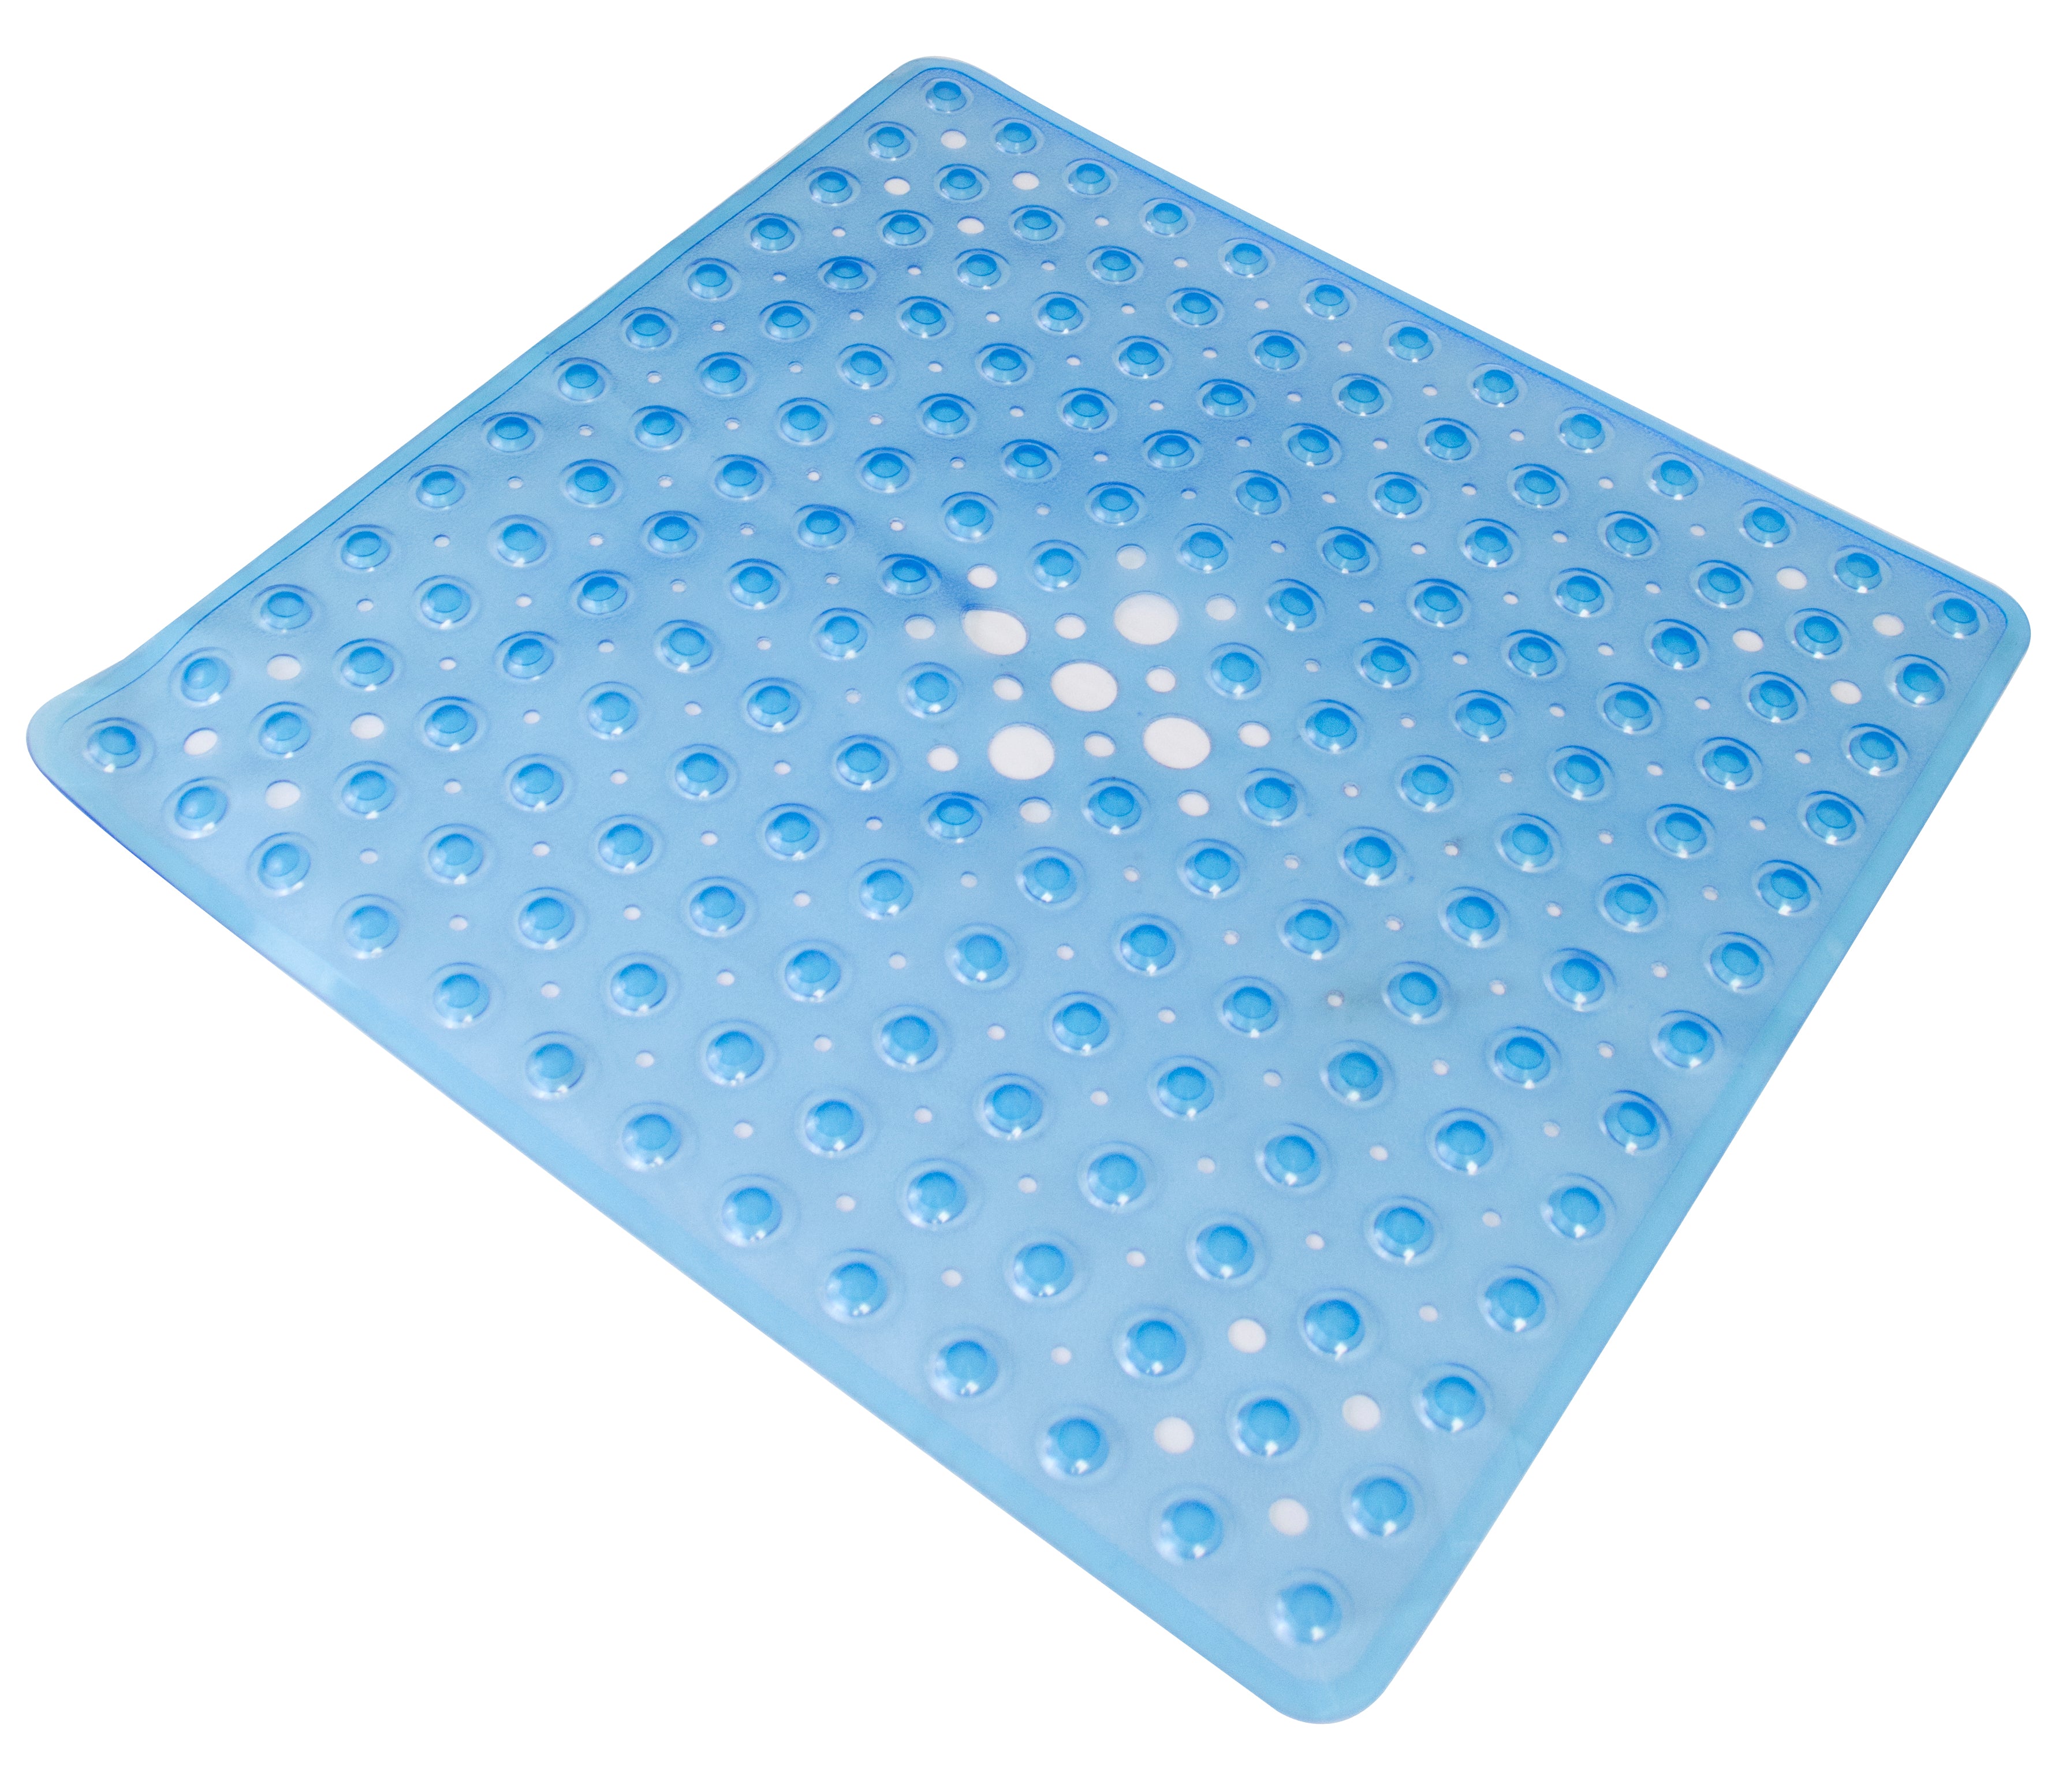 TranquilBeauty Square Blue Shower Mat 53x53cm/21x21in | Non-Slip, Machine-Washable Quadrant Bath Mat for Walk in Shower Tray | Shower Mats Non-Slip